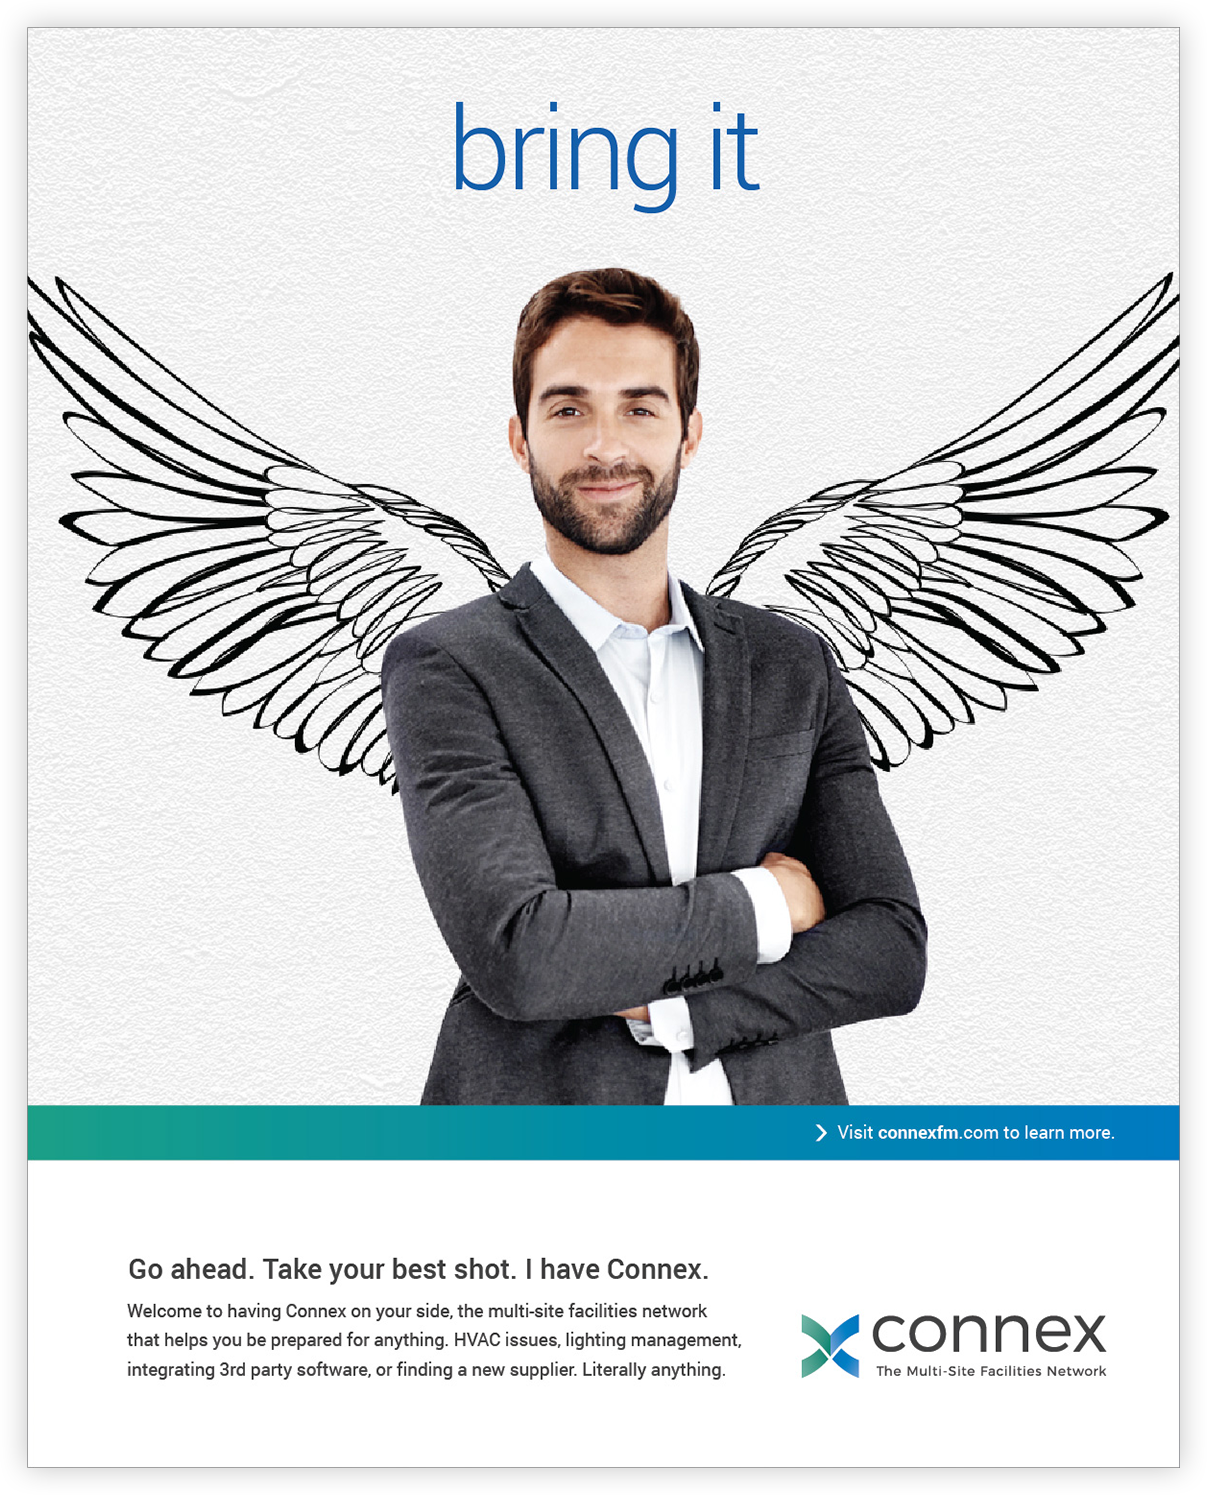 Connex marketing - Dallas Marketing Agency - Dallas Advertising Agency - Agency Creative Dallas